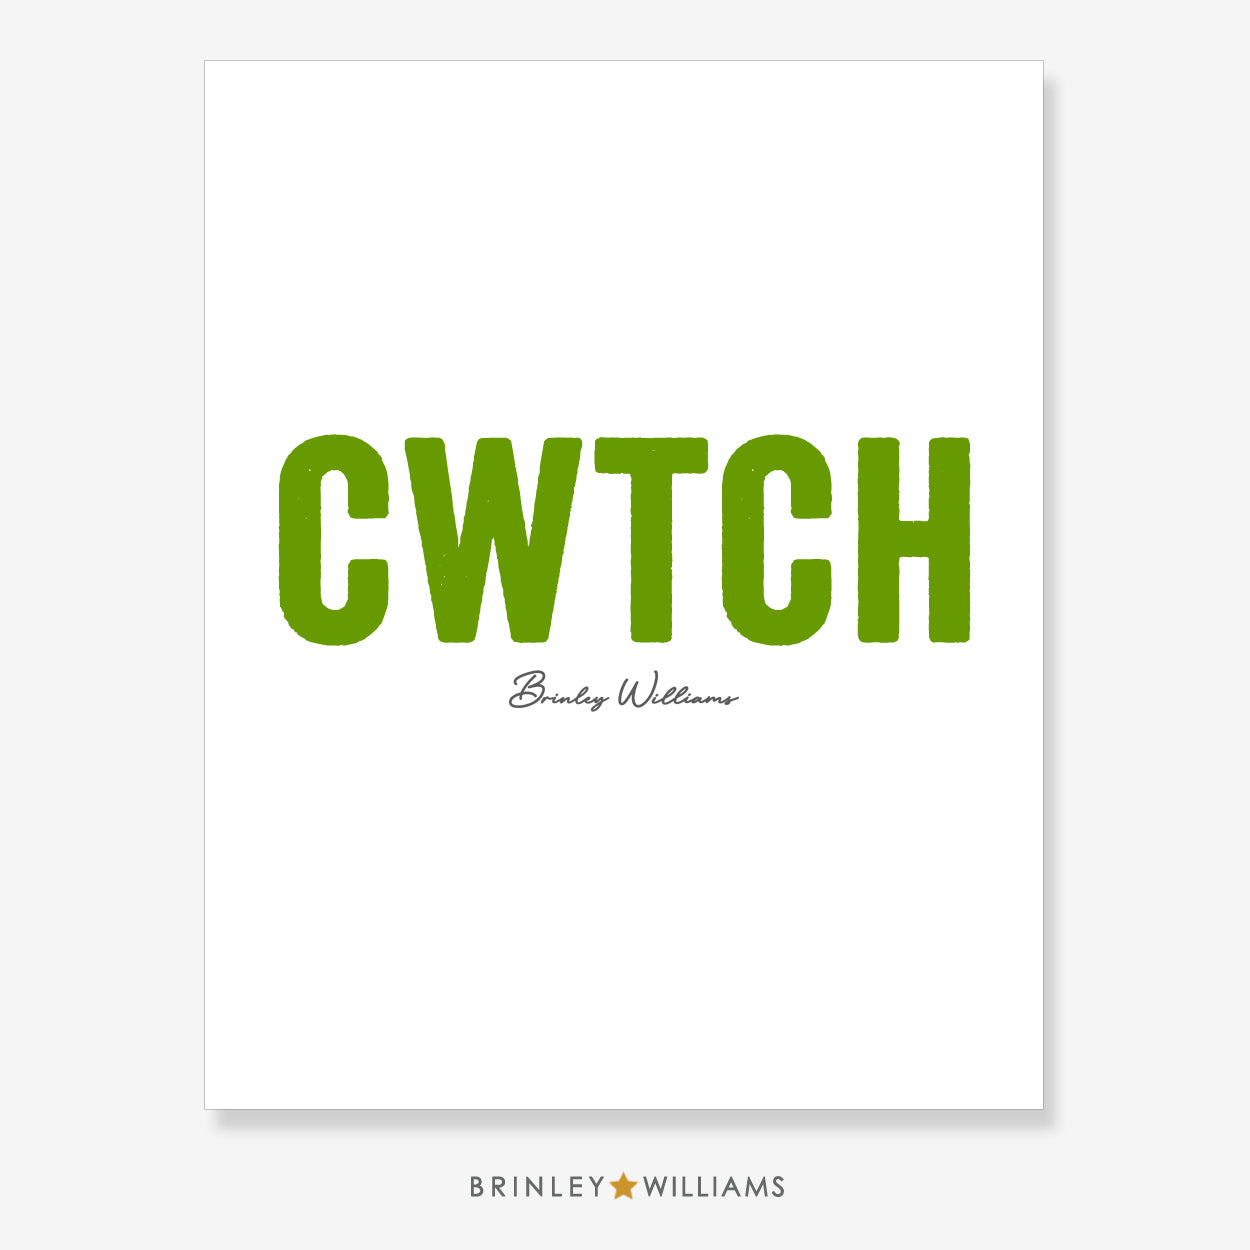 Big Cwtch Wall Art Poster - Green